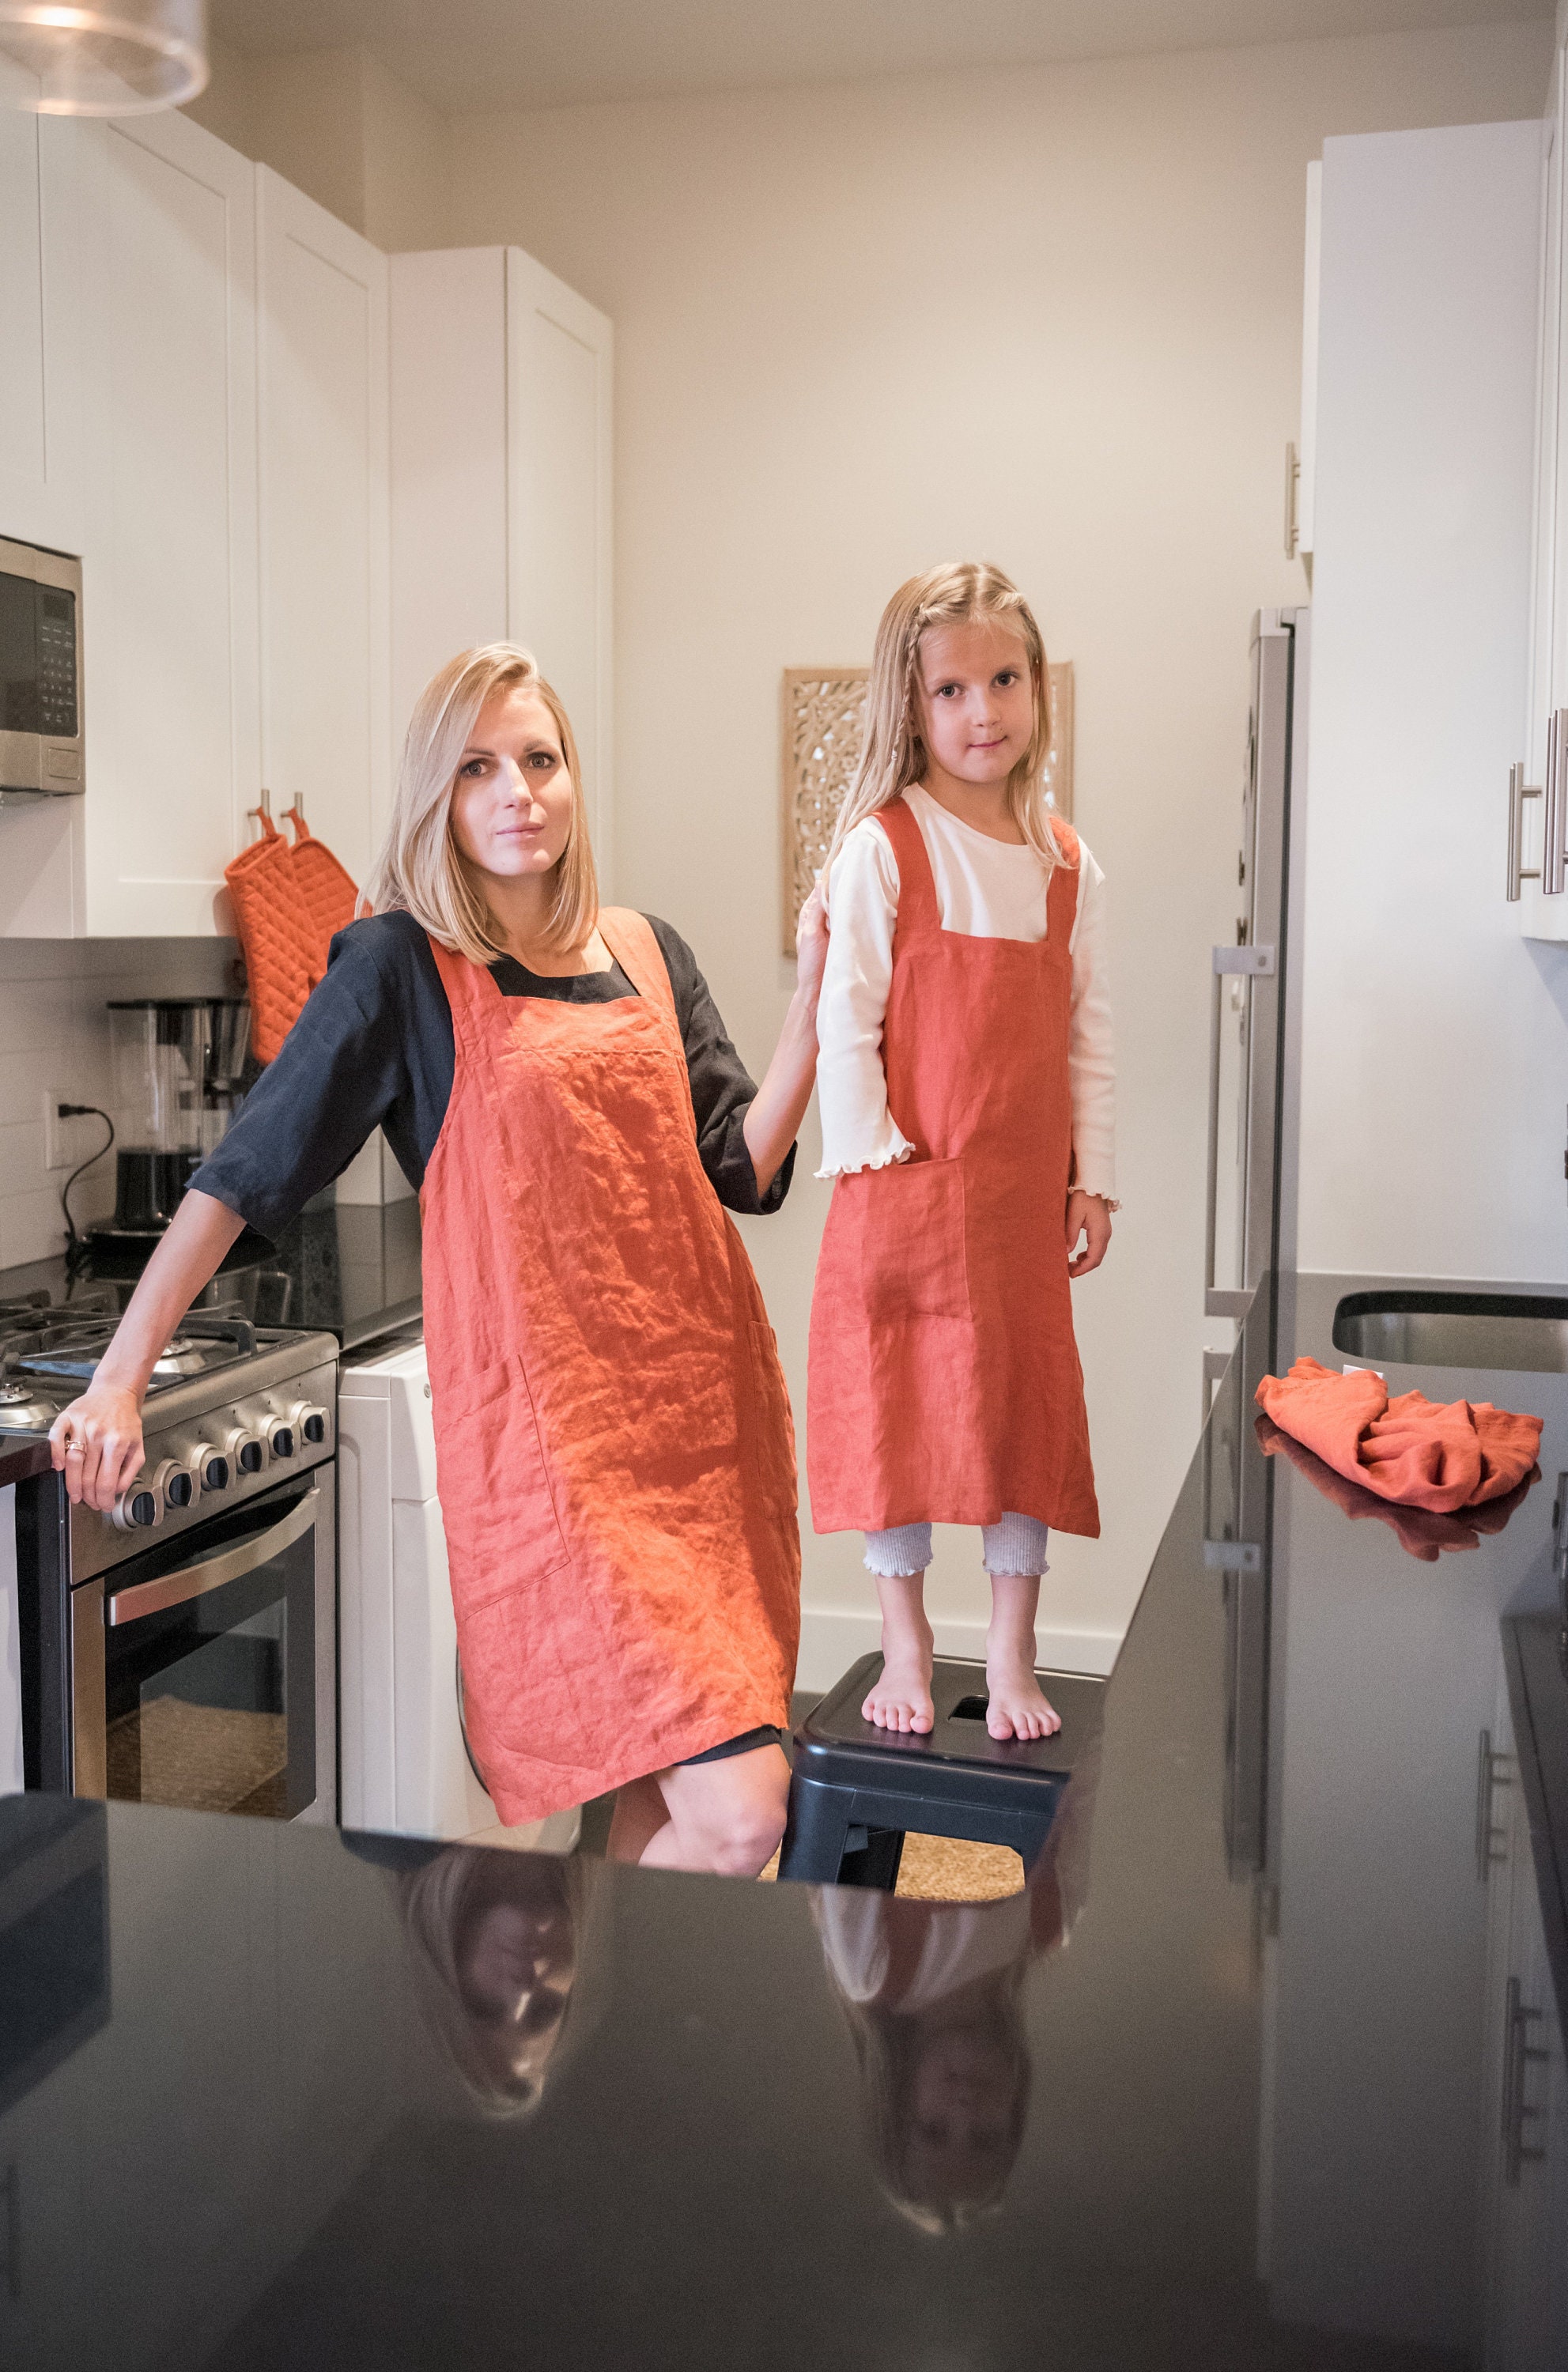 NEOVIVA Kitchen Linen Set for Kid Boys, Cute Kids Apron and Child Oven